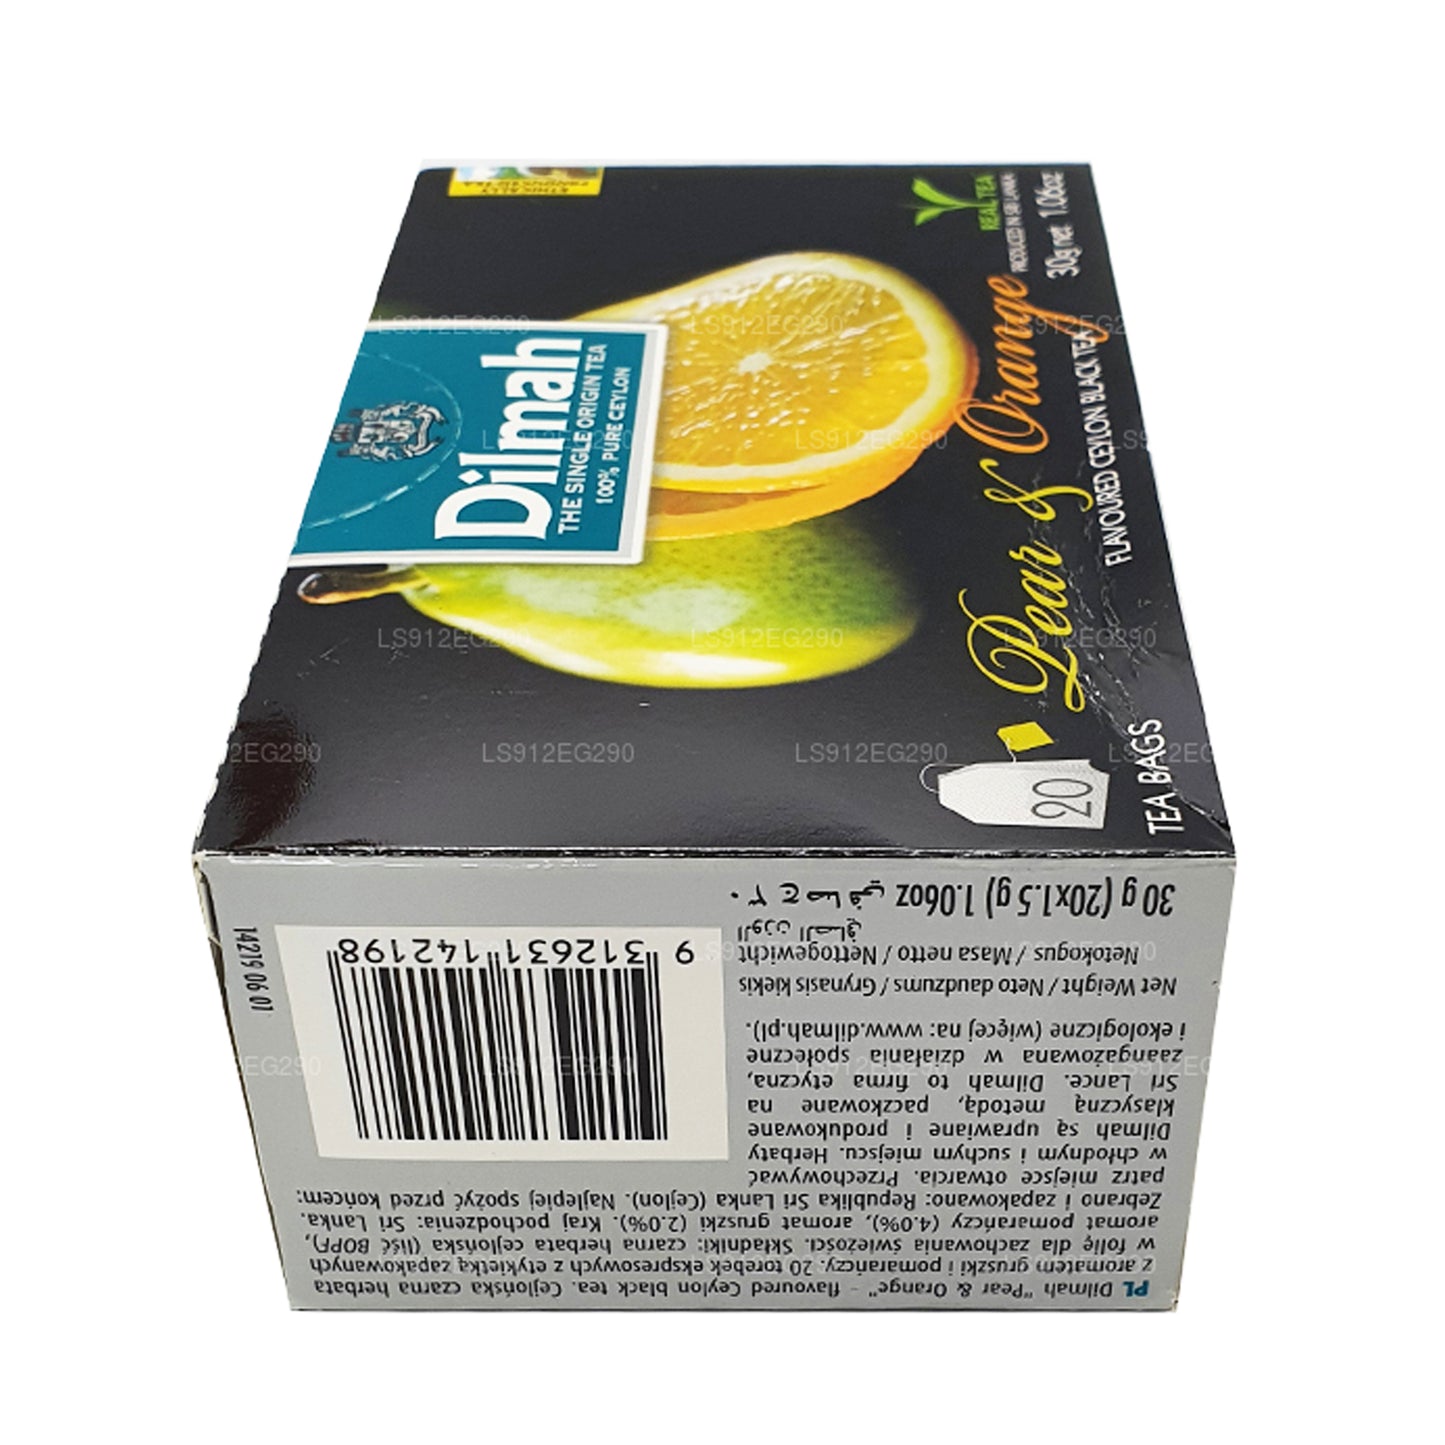 Dilmah Armut ve Portakal Aromalı Seylan Siyah Çay (30g) 20 Çay Poşeti